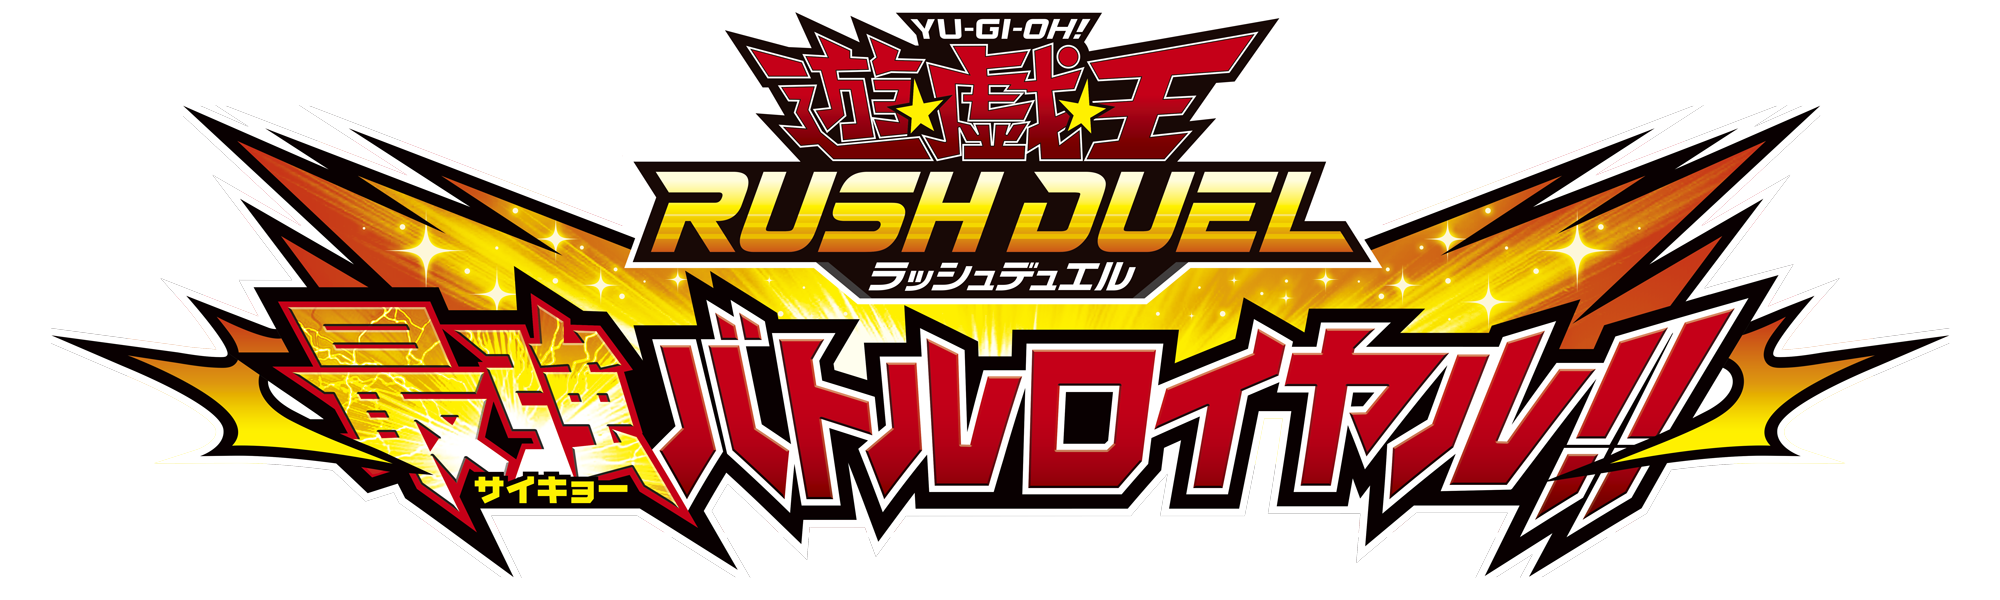 Yu-Gi-Oh! RUSH DUEL: Dawn of the Battle Royale!!